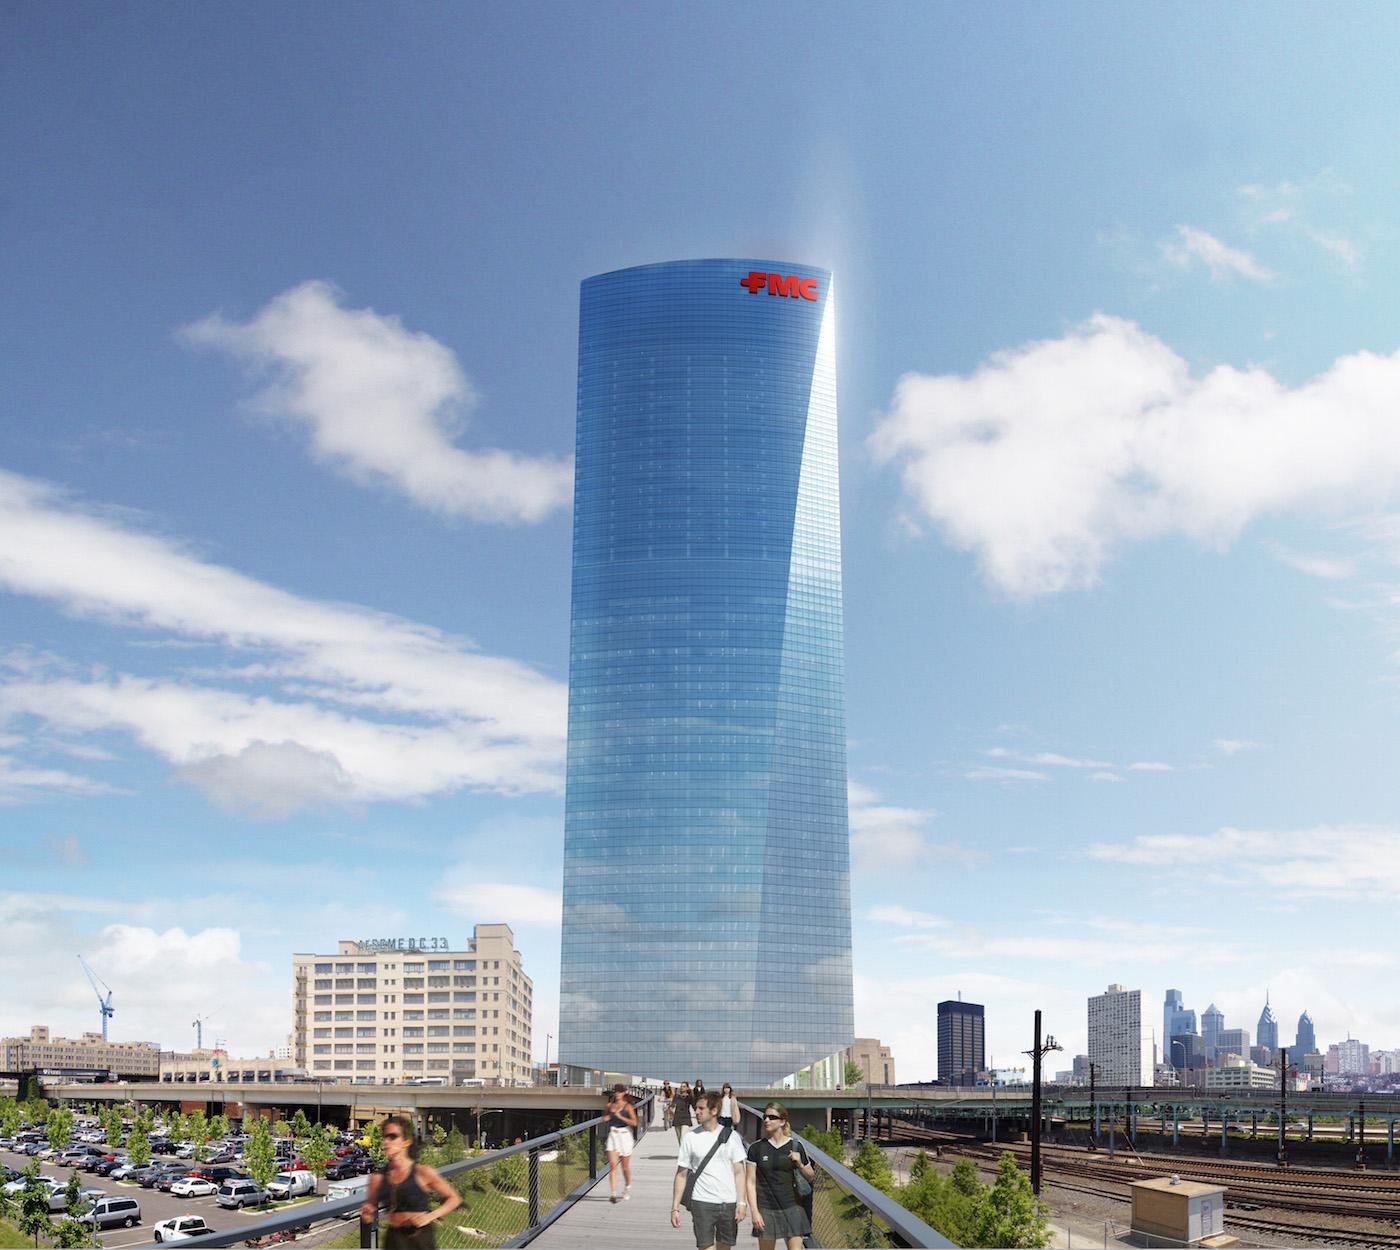 FMC Tower Extends Philadelphia's Skyline to the West | SkyriseCities